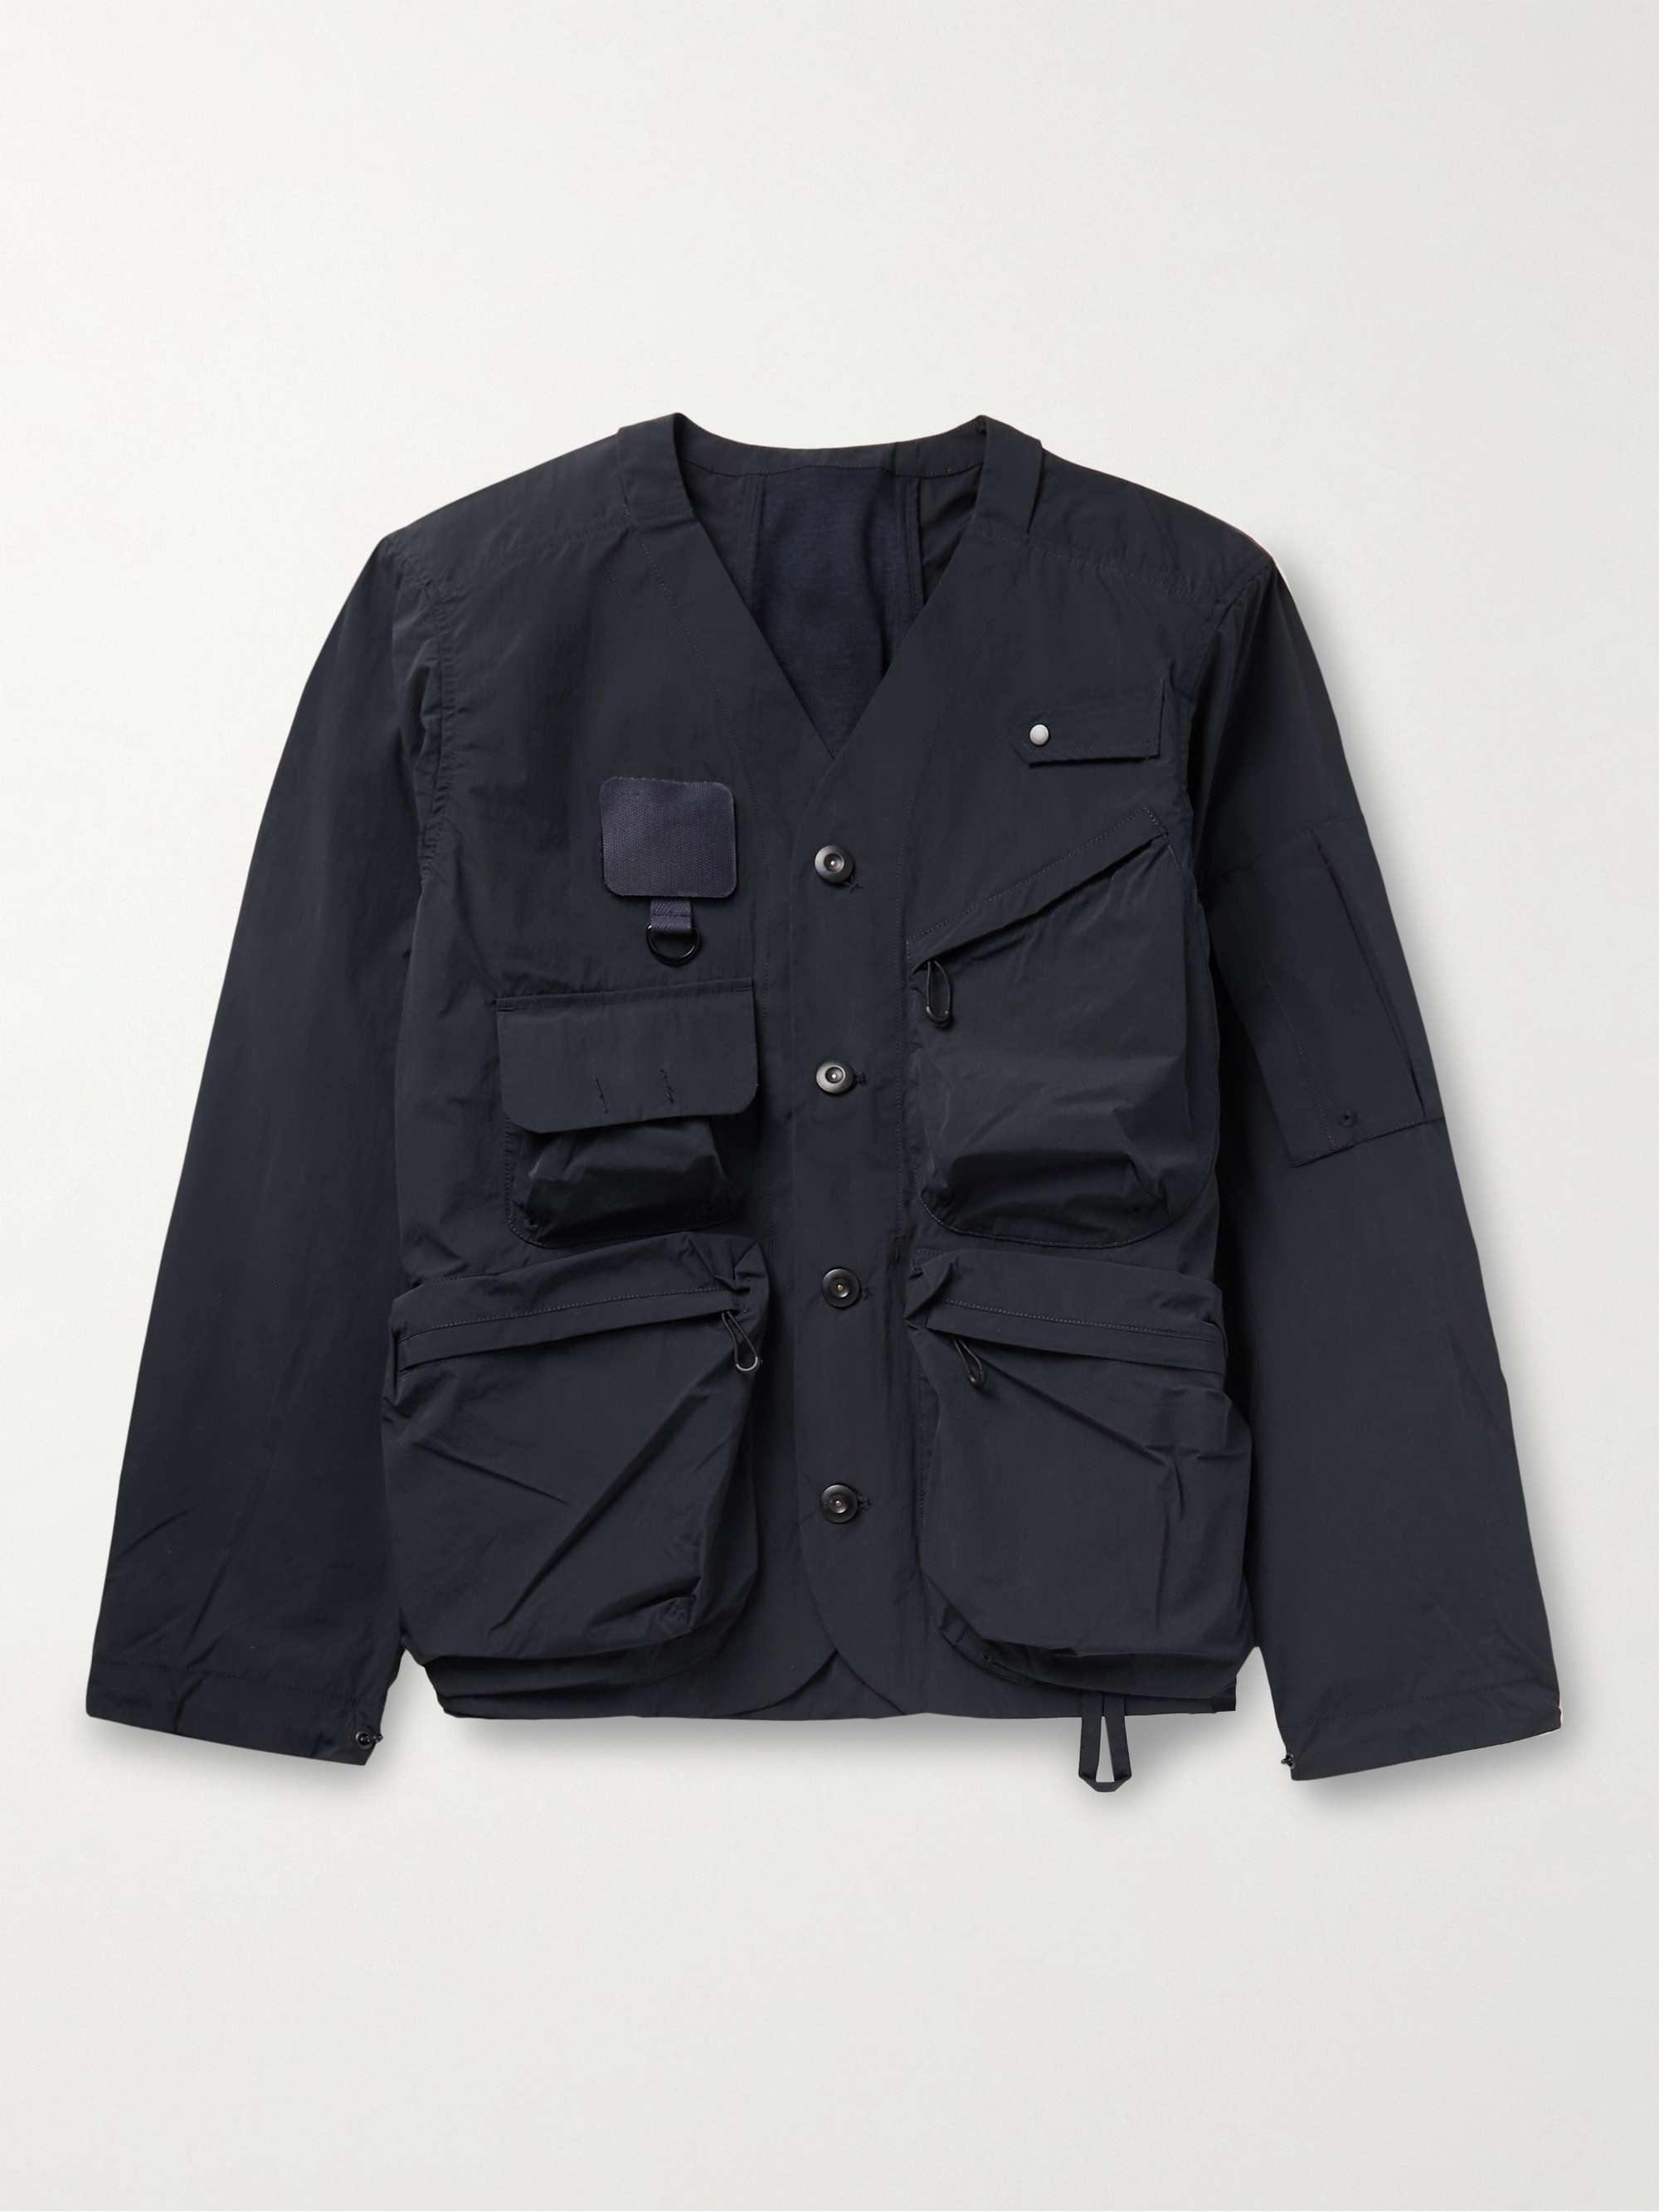 NORBIT BY HIROSHI NOZAWA Nylon Field Jacket for Men | MR PORTER